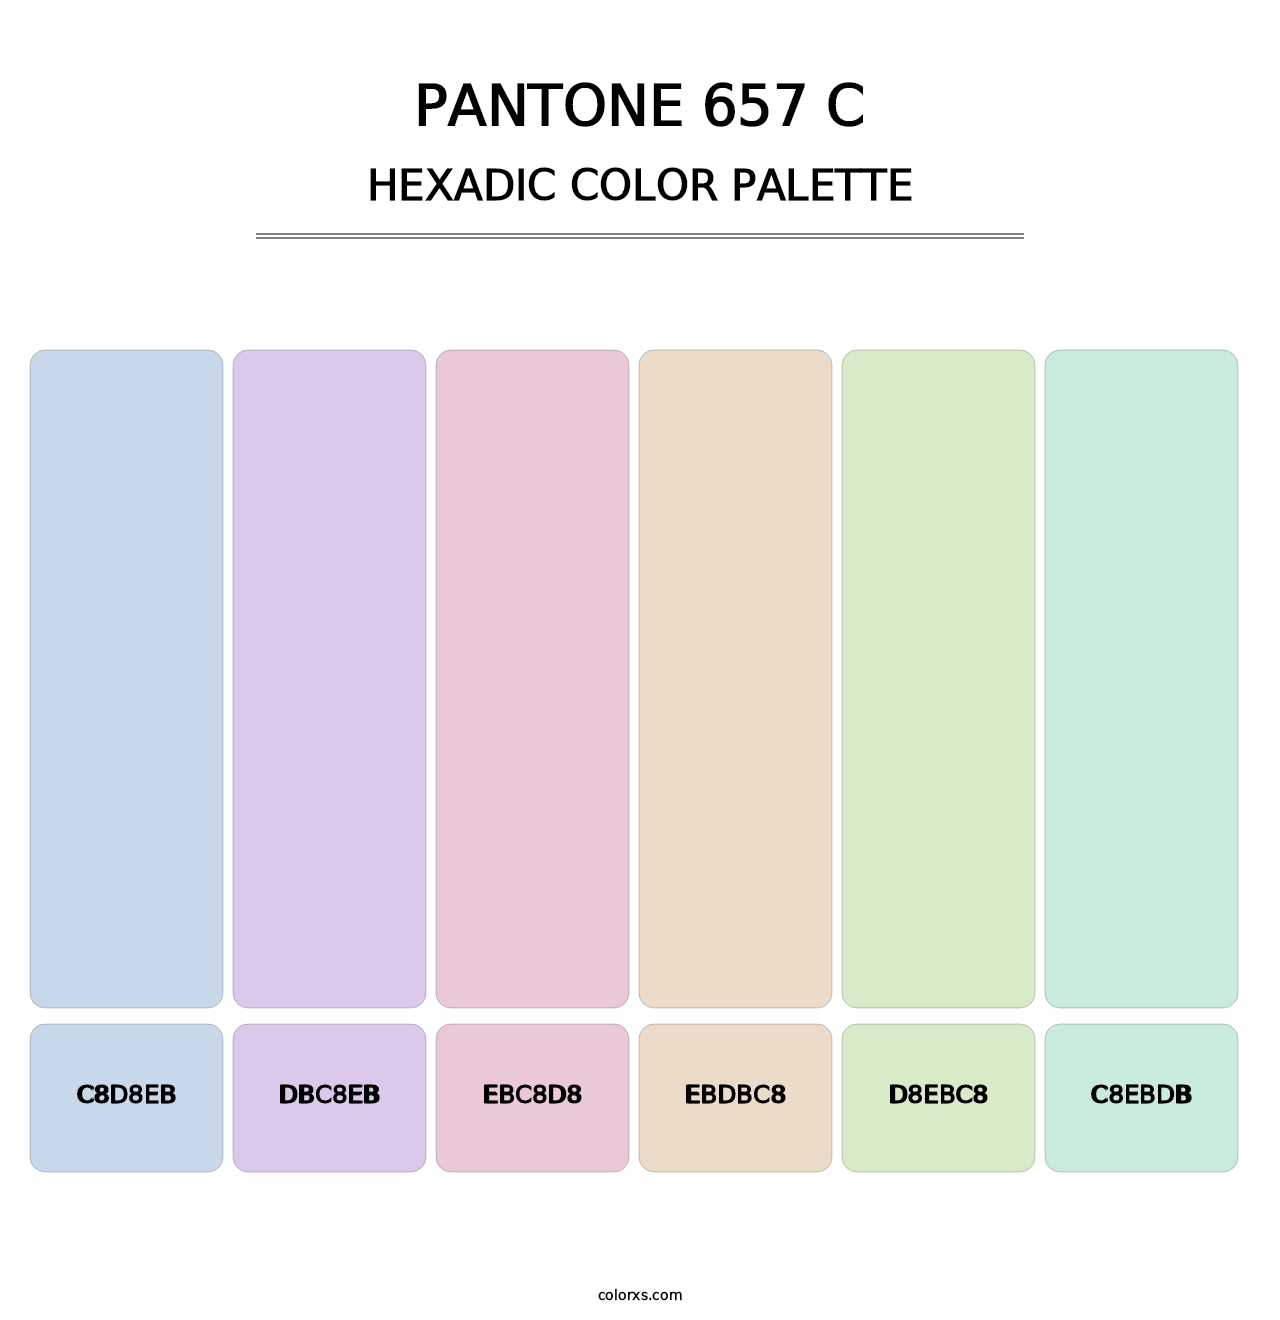 PANTONE 657 C - Hexadic Color Palette